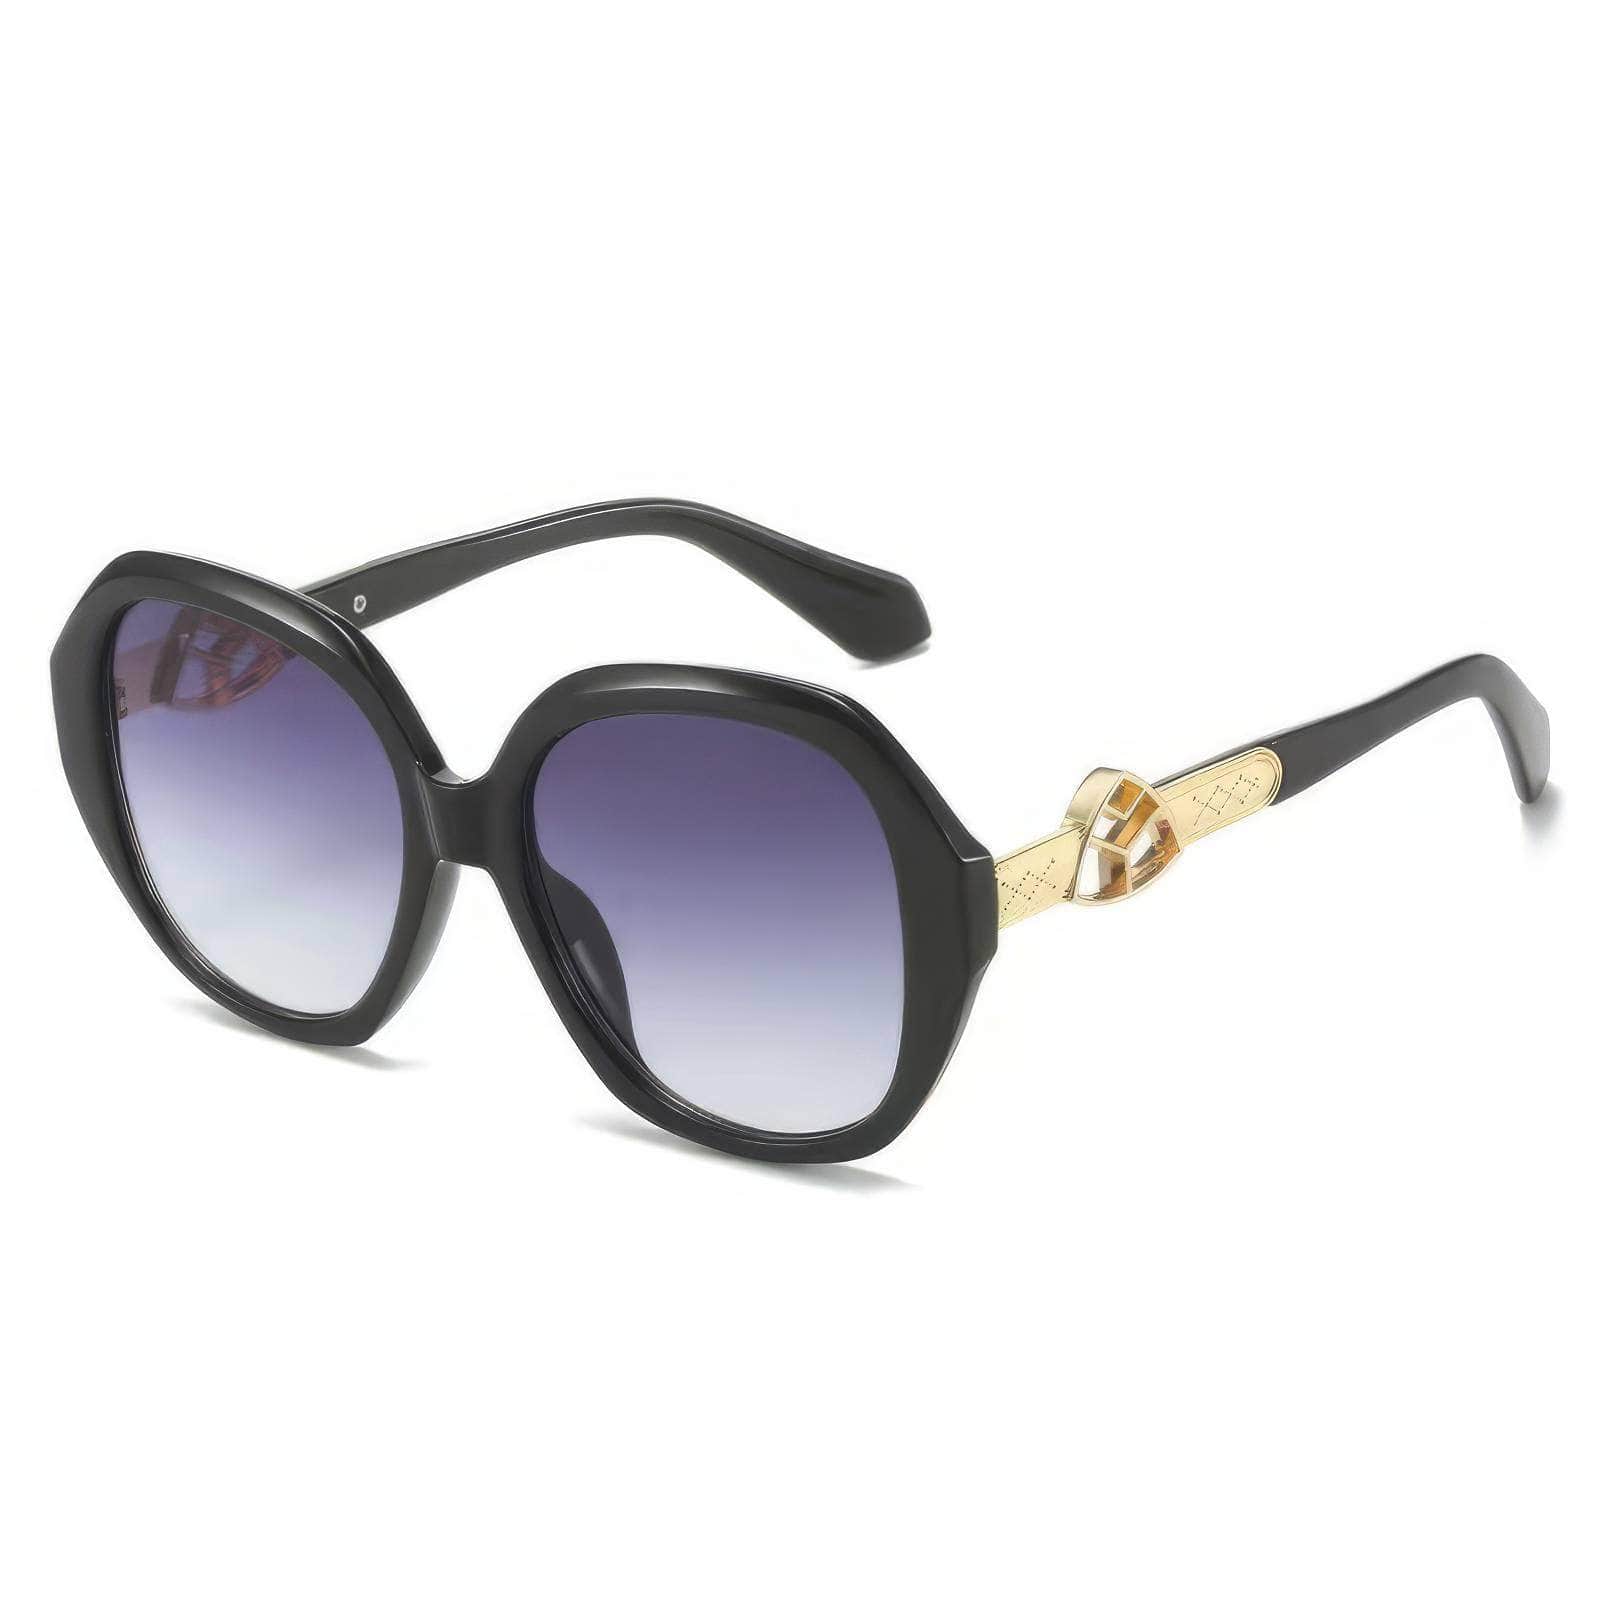 Oval Triangle Frame Sunglasses